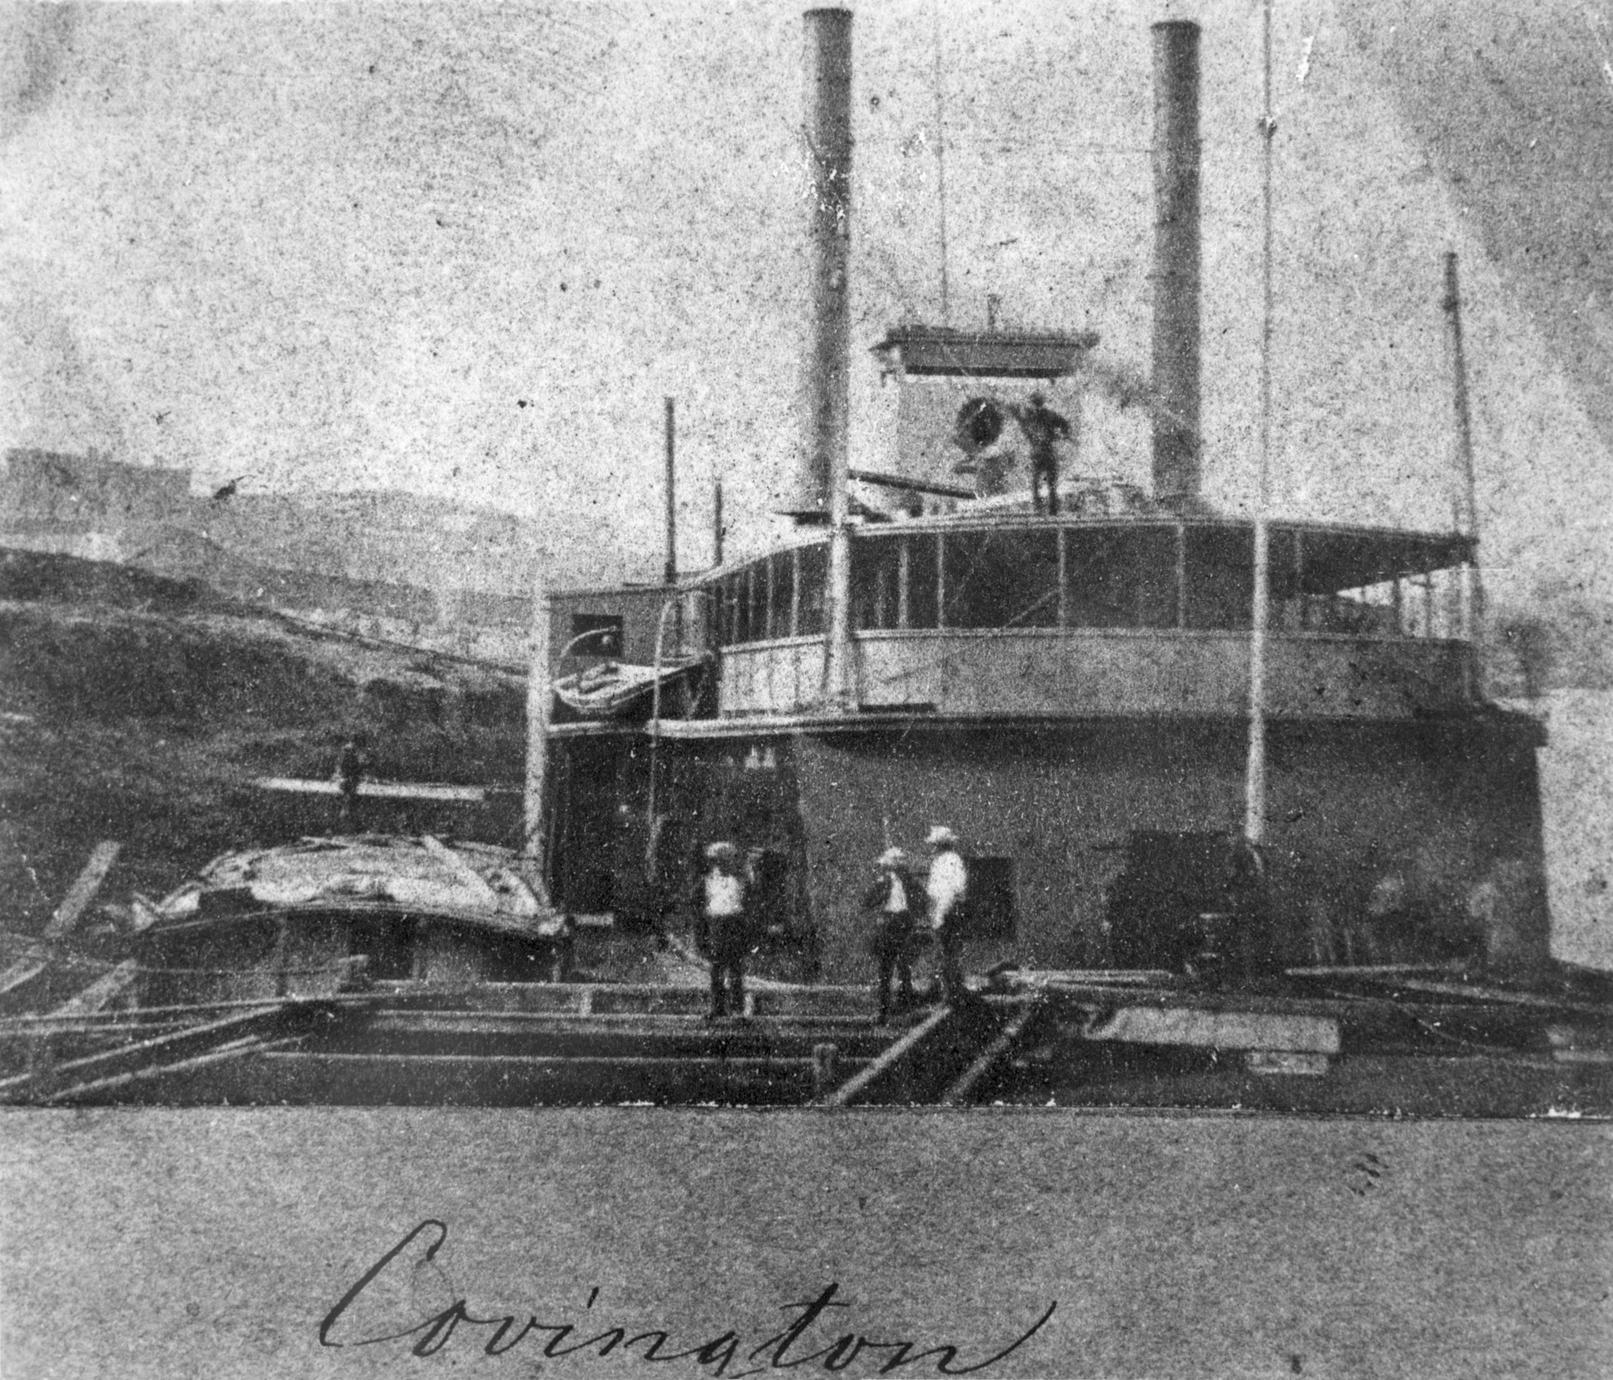 Covington (Ferry/Gunboat, 1862-1864)